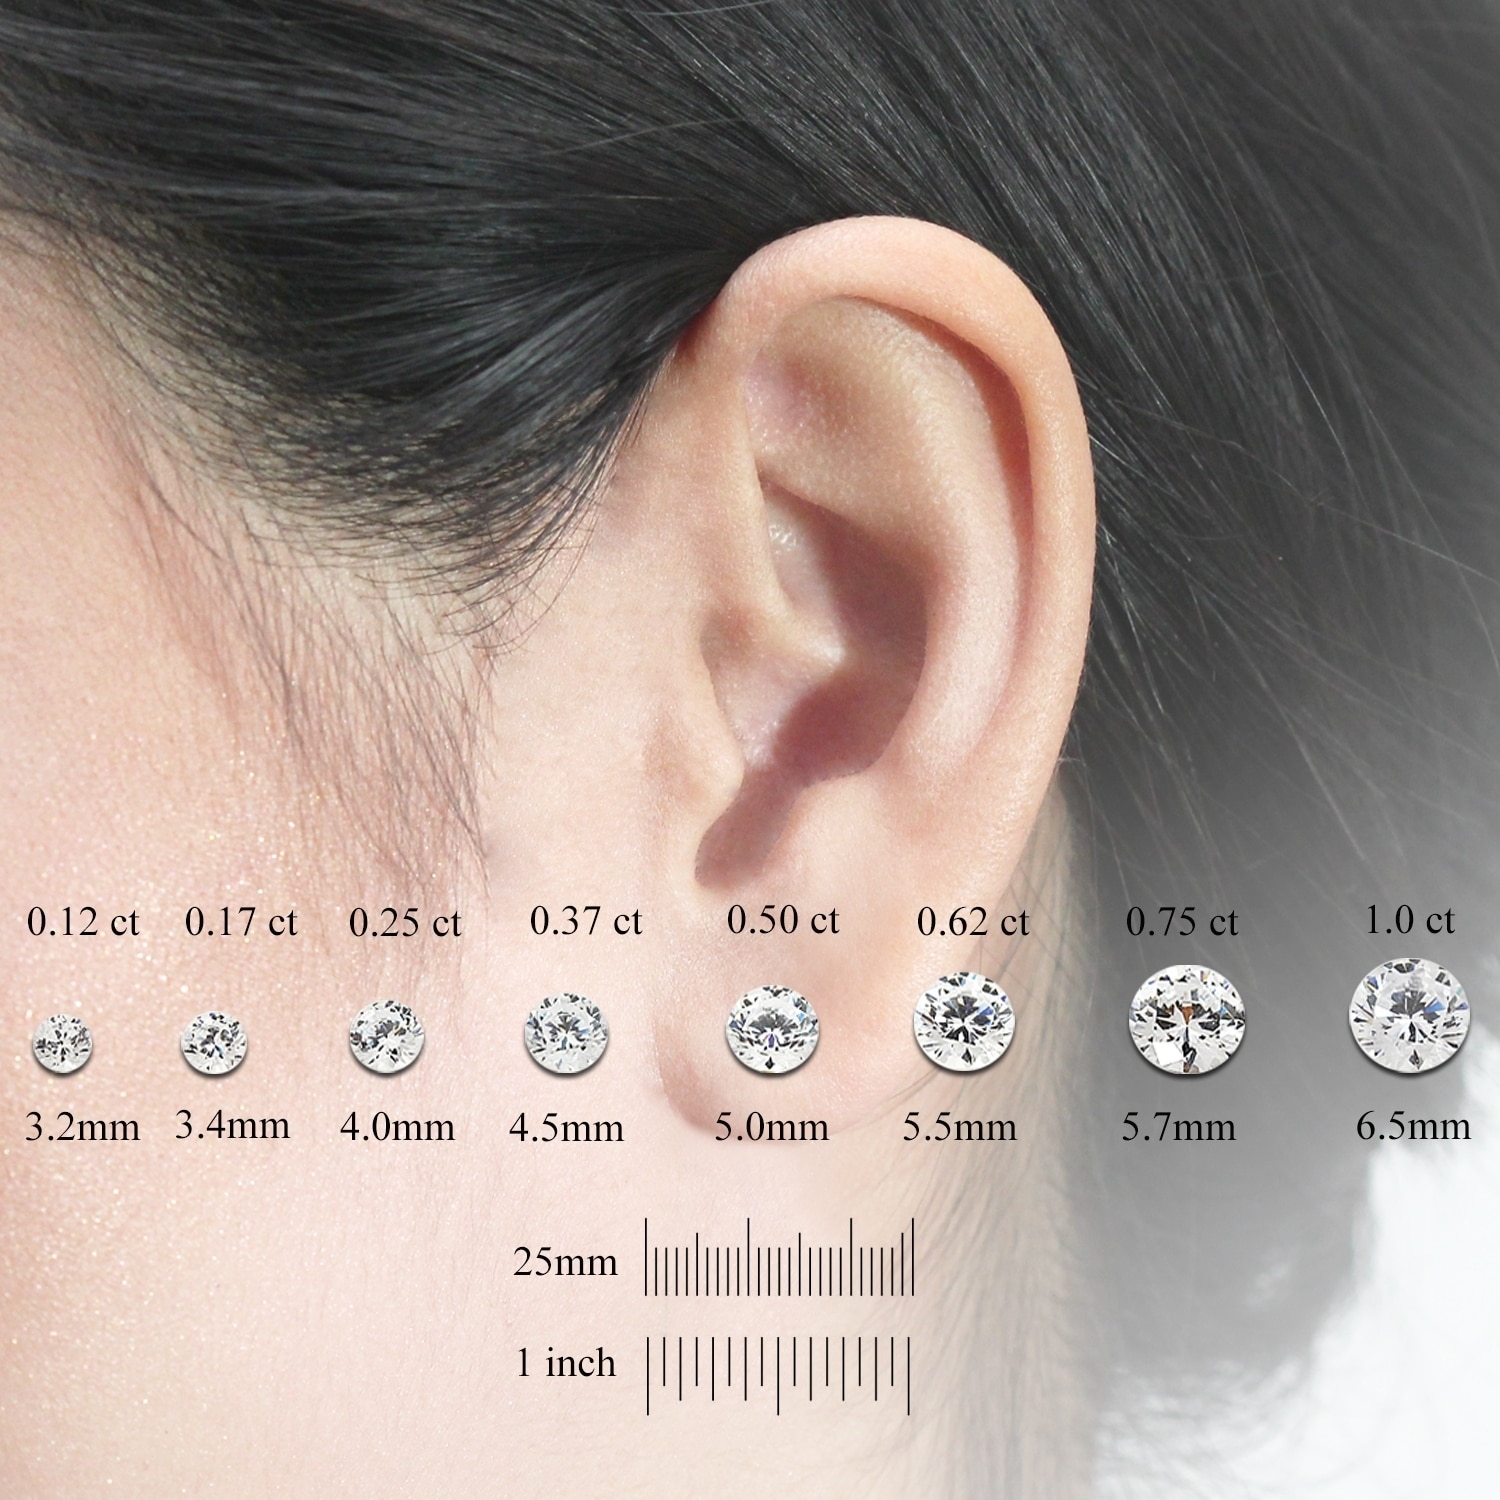 Discover more than 74 1 inch stud earrings best - esthdonghoadian